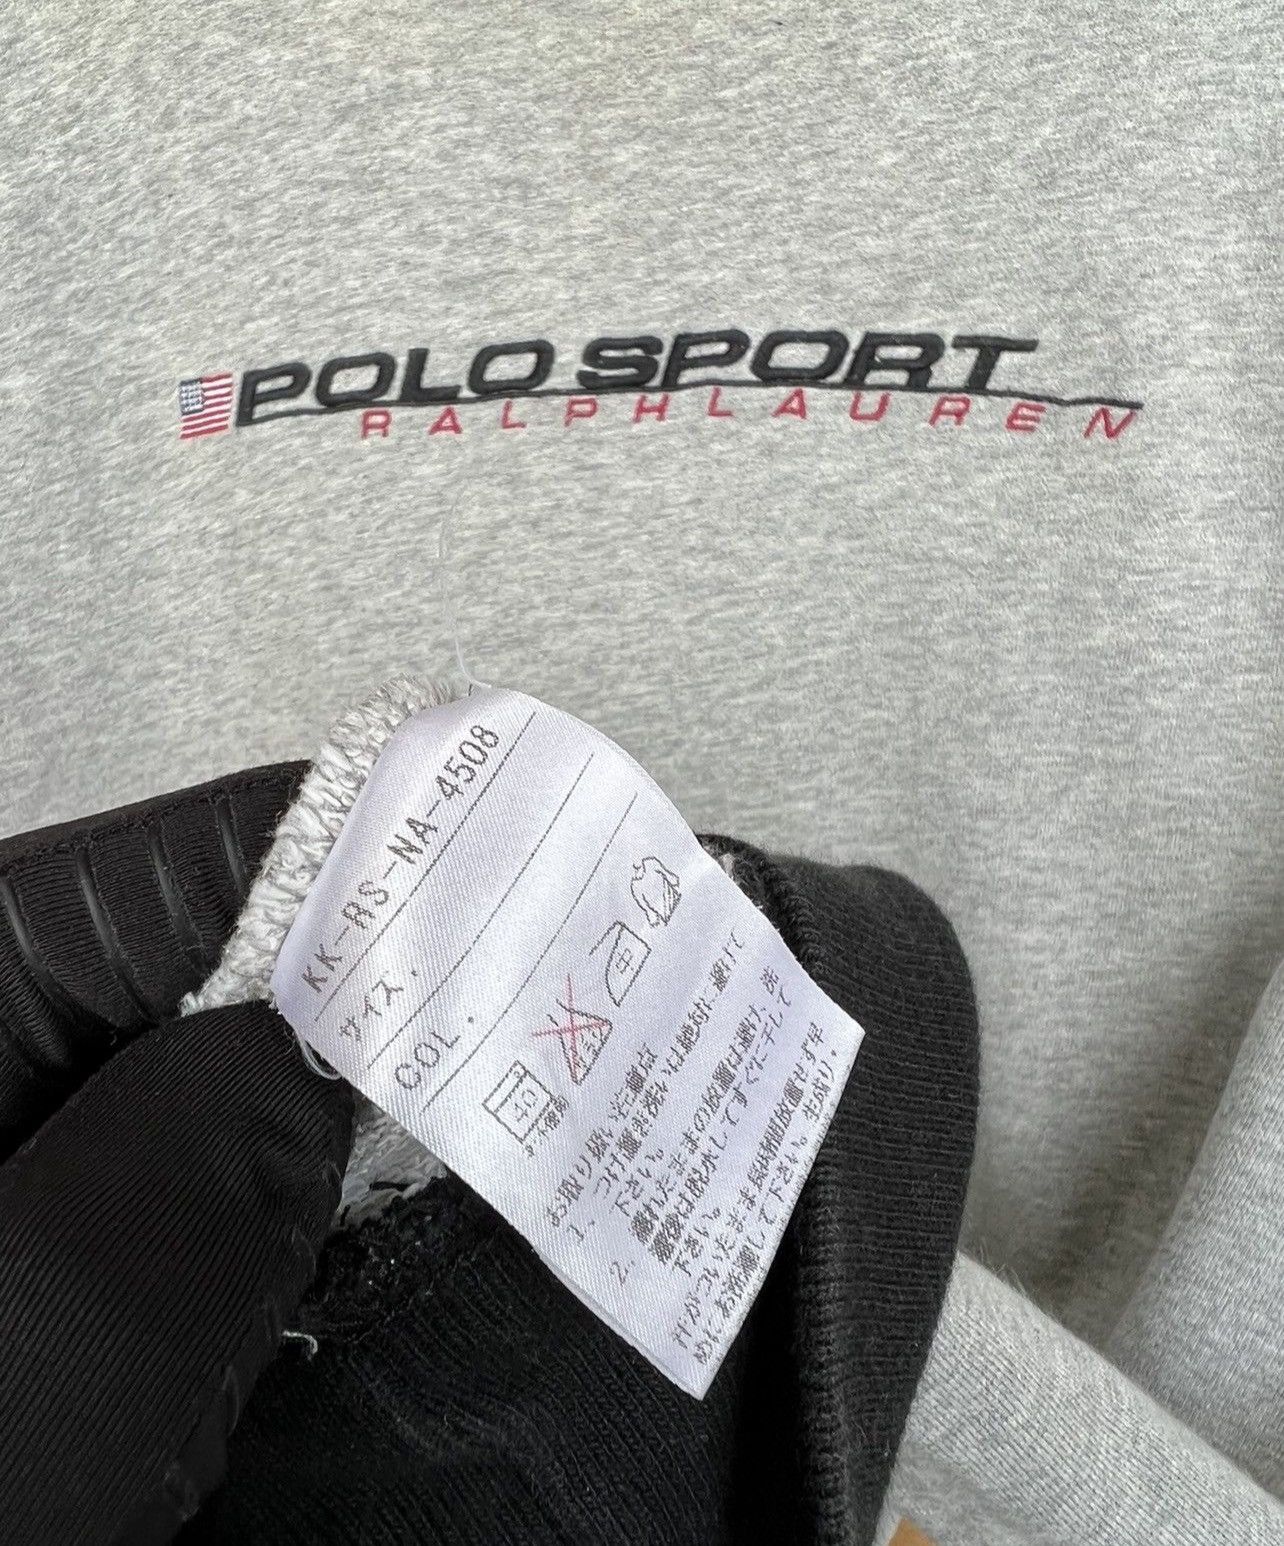 Vintage Polo Sport Ralph Lauren Embroidered Grey Sweatshirt - 7